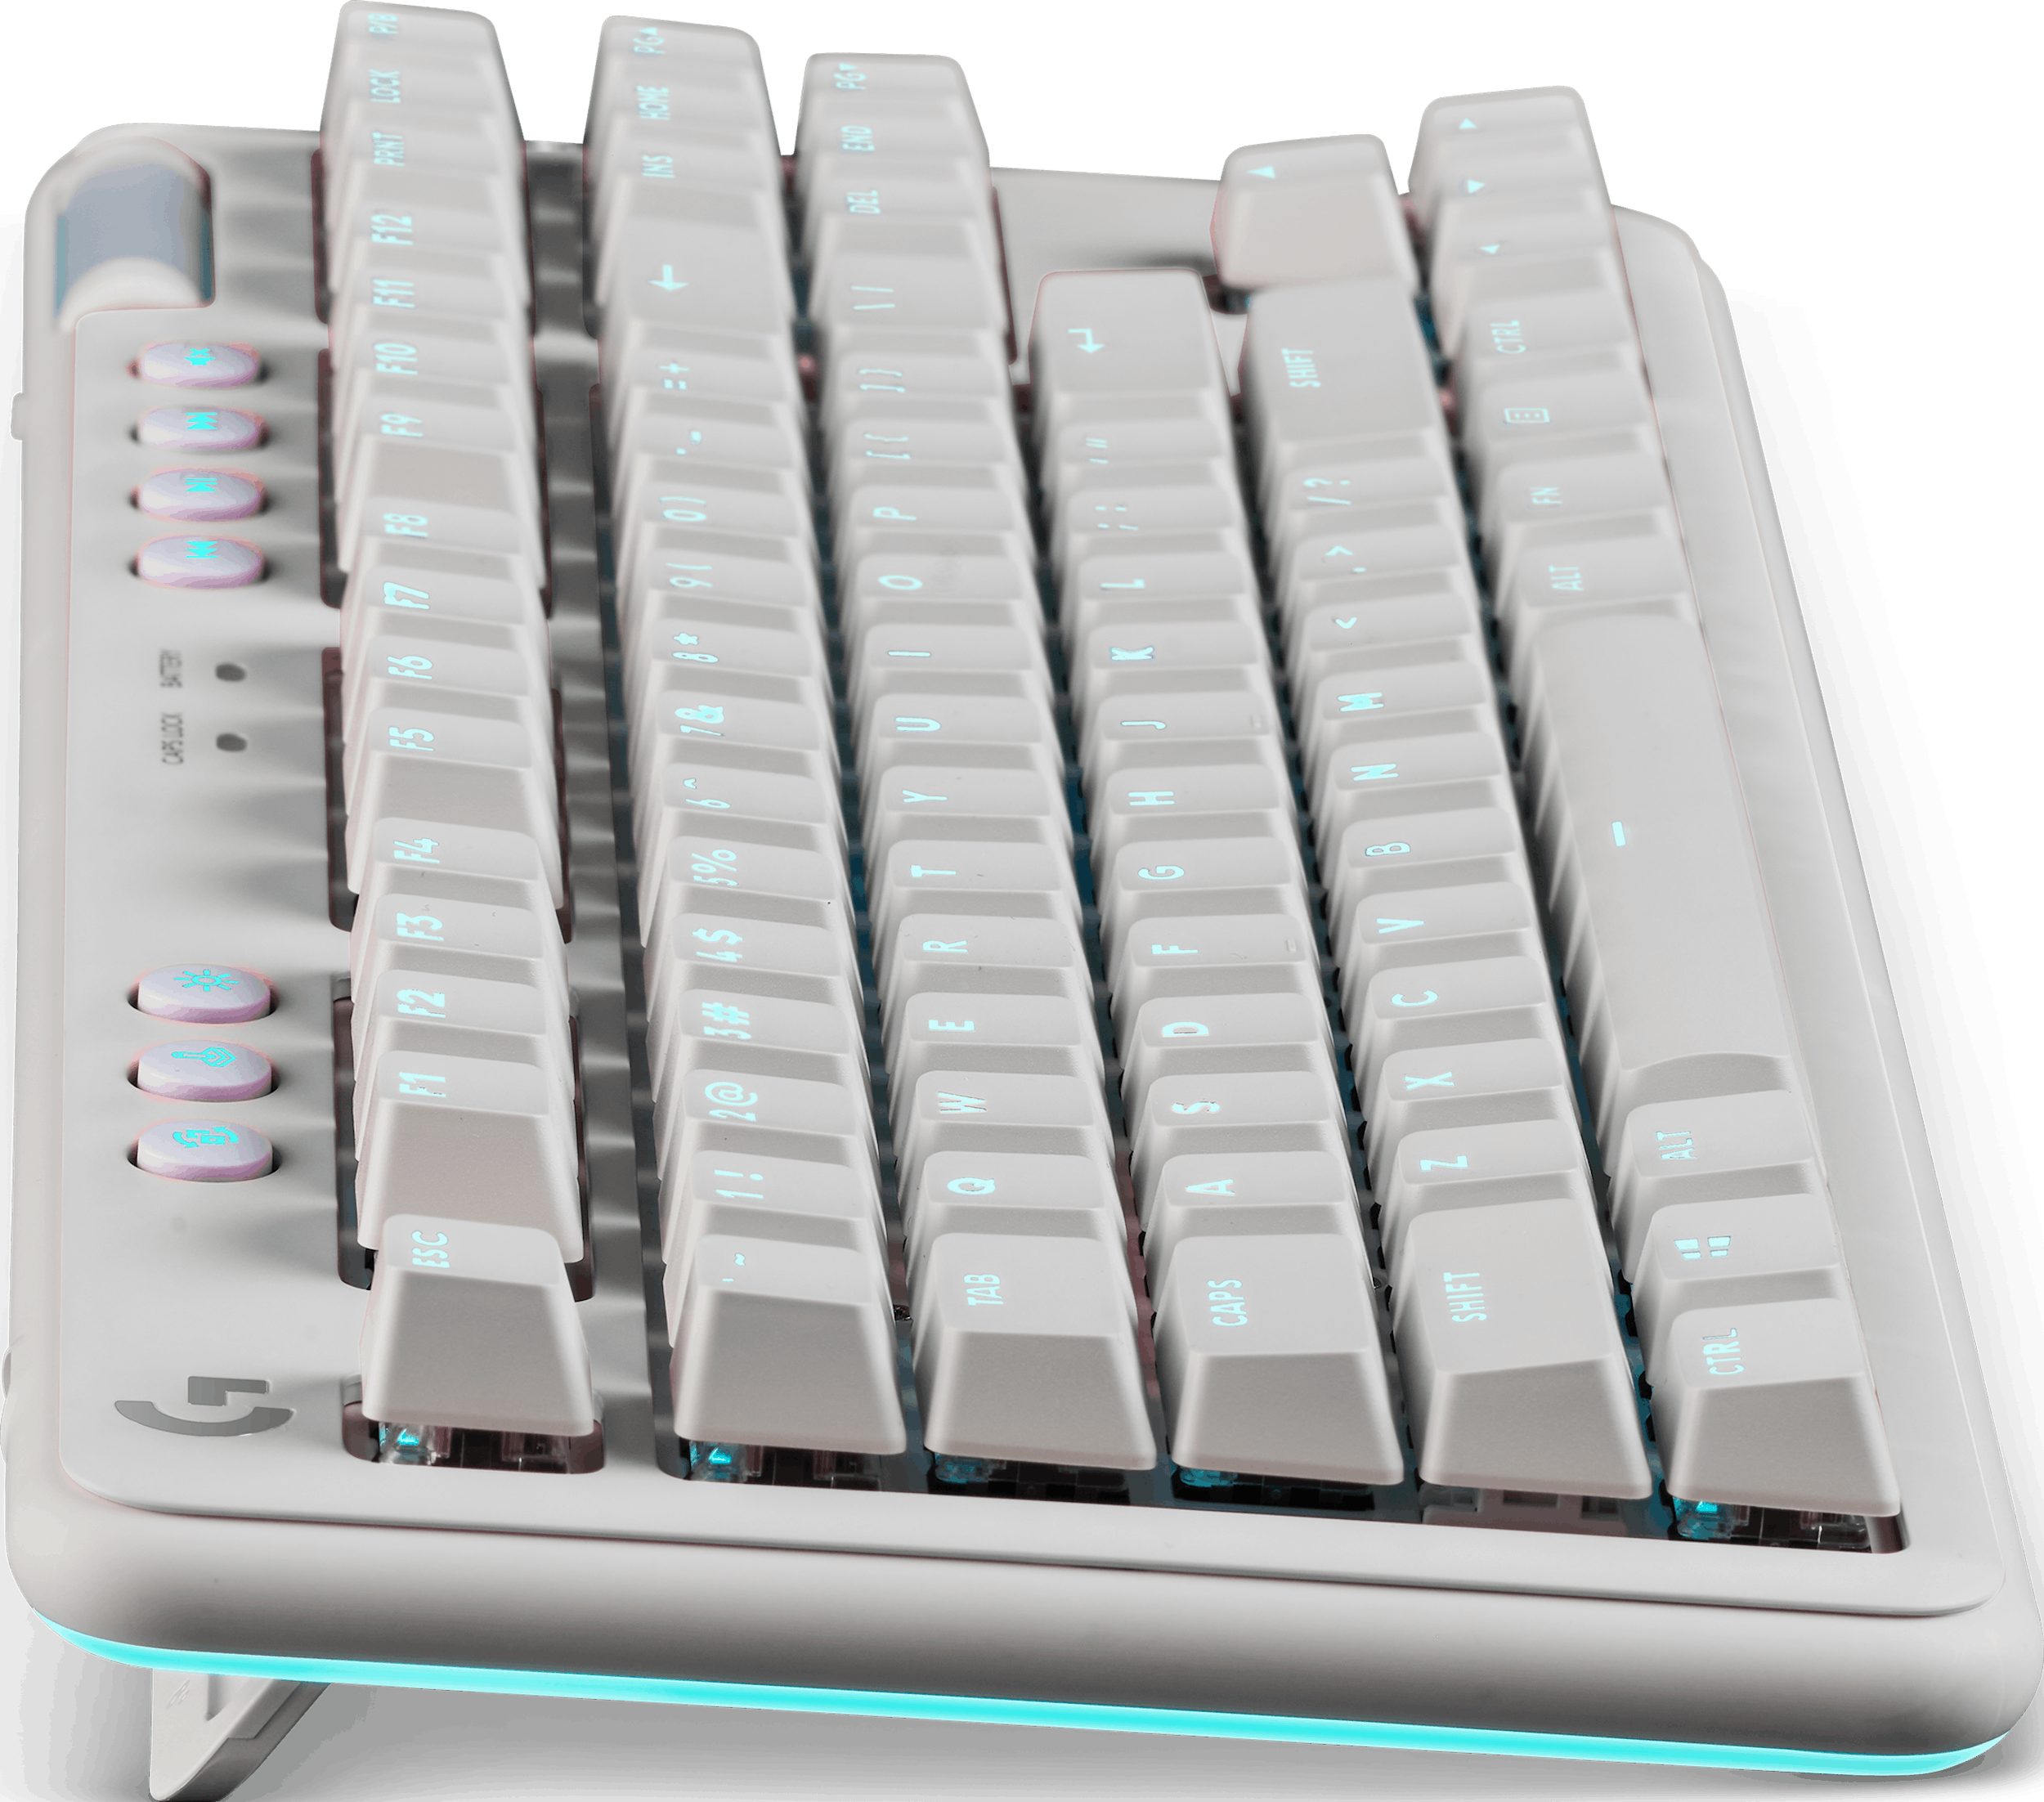 Logitech G715 Clicky Wireless Gaming Keyboard, 78231657